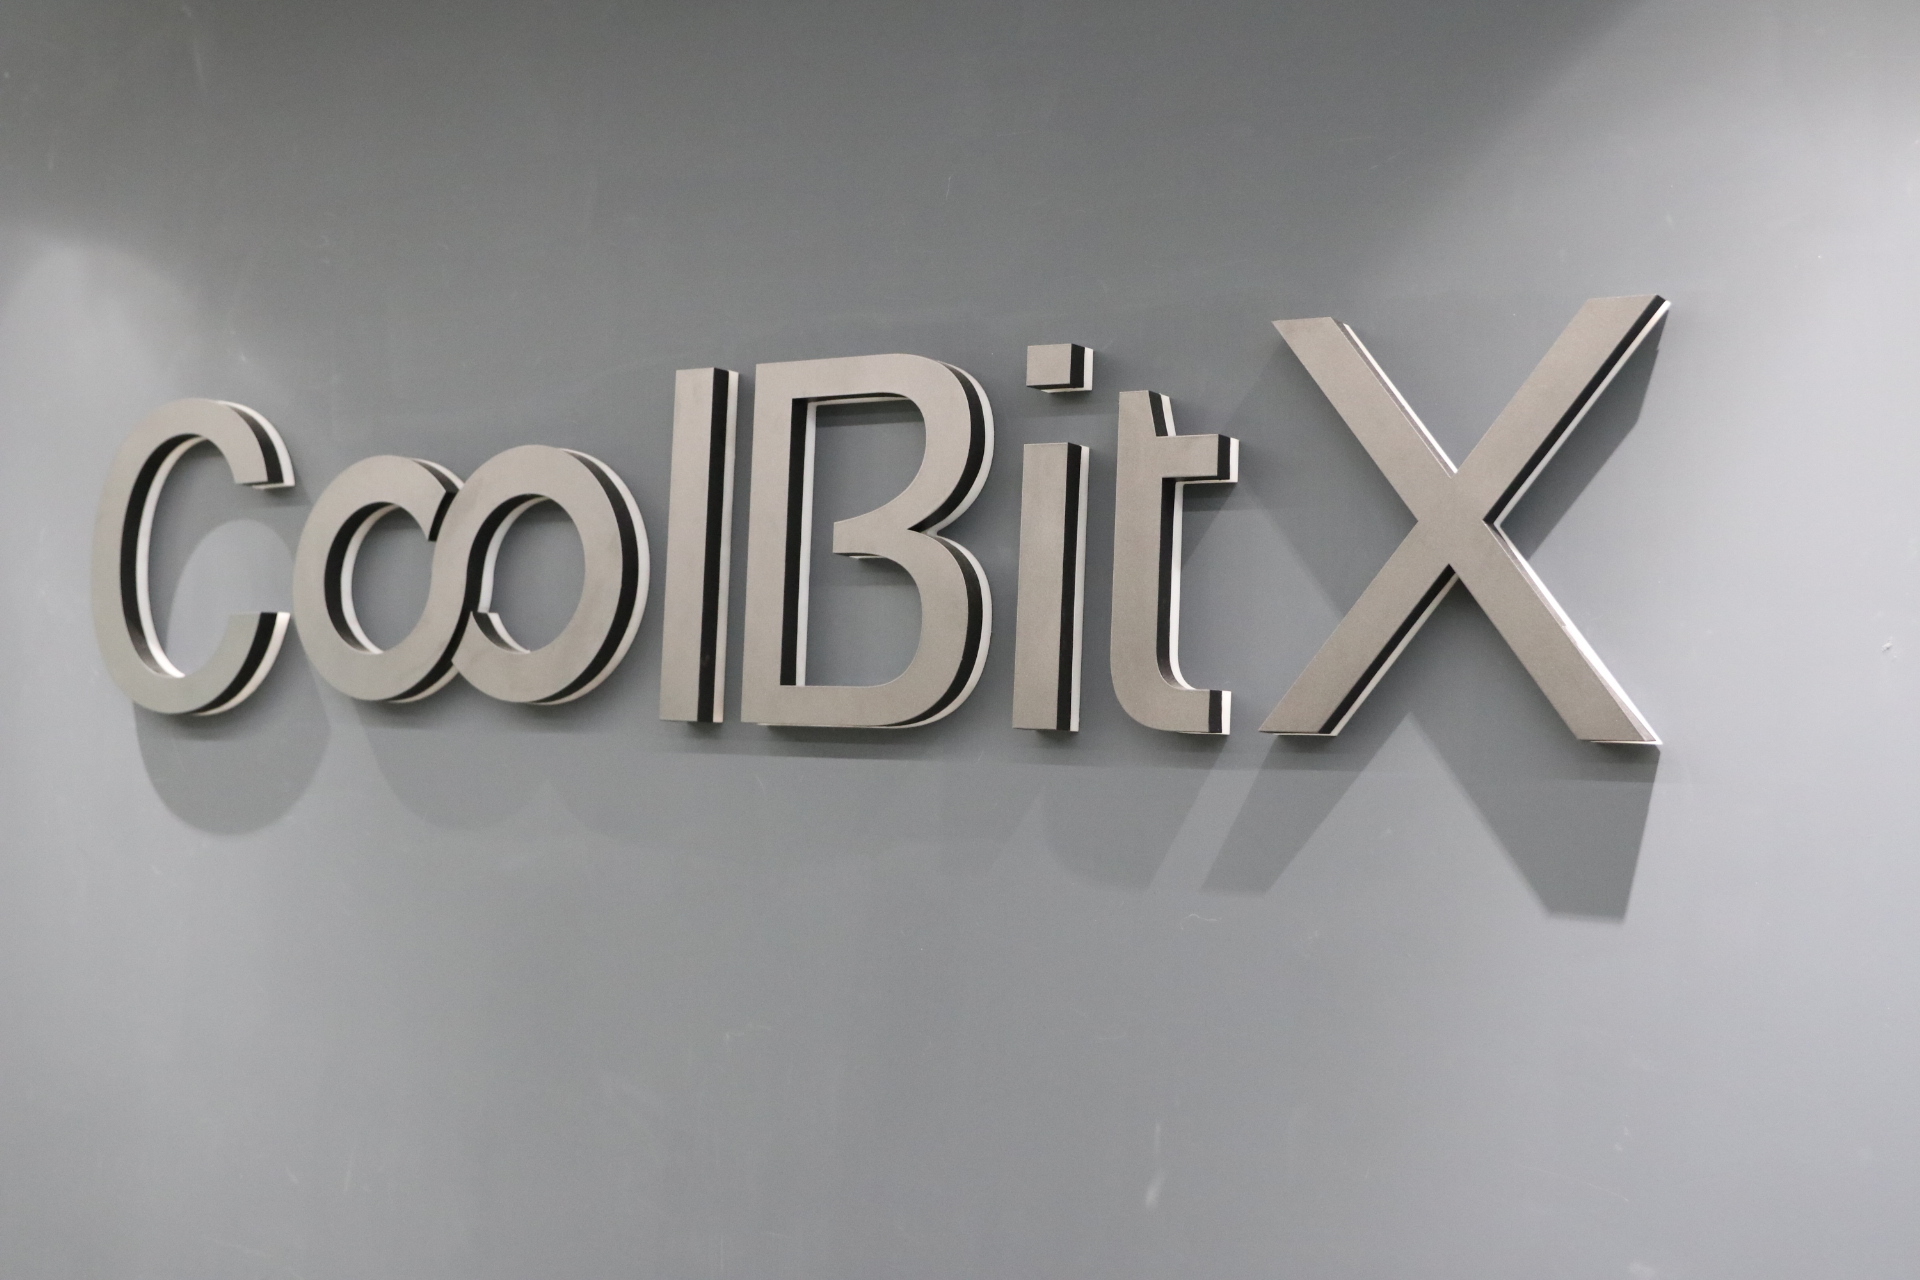 CoolBitX1